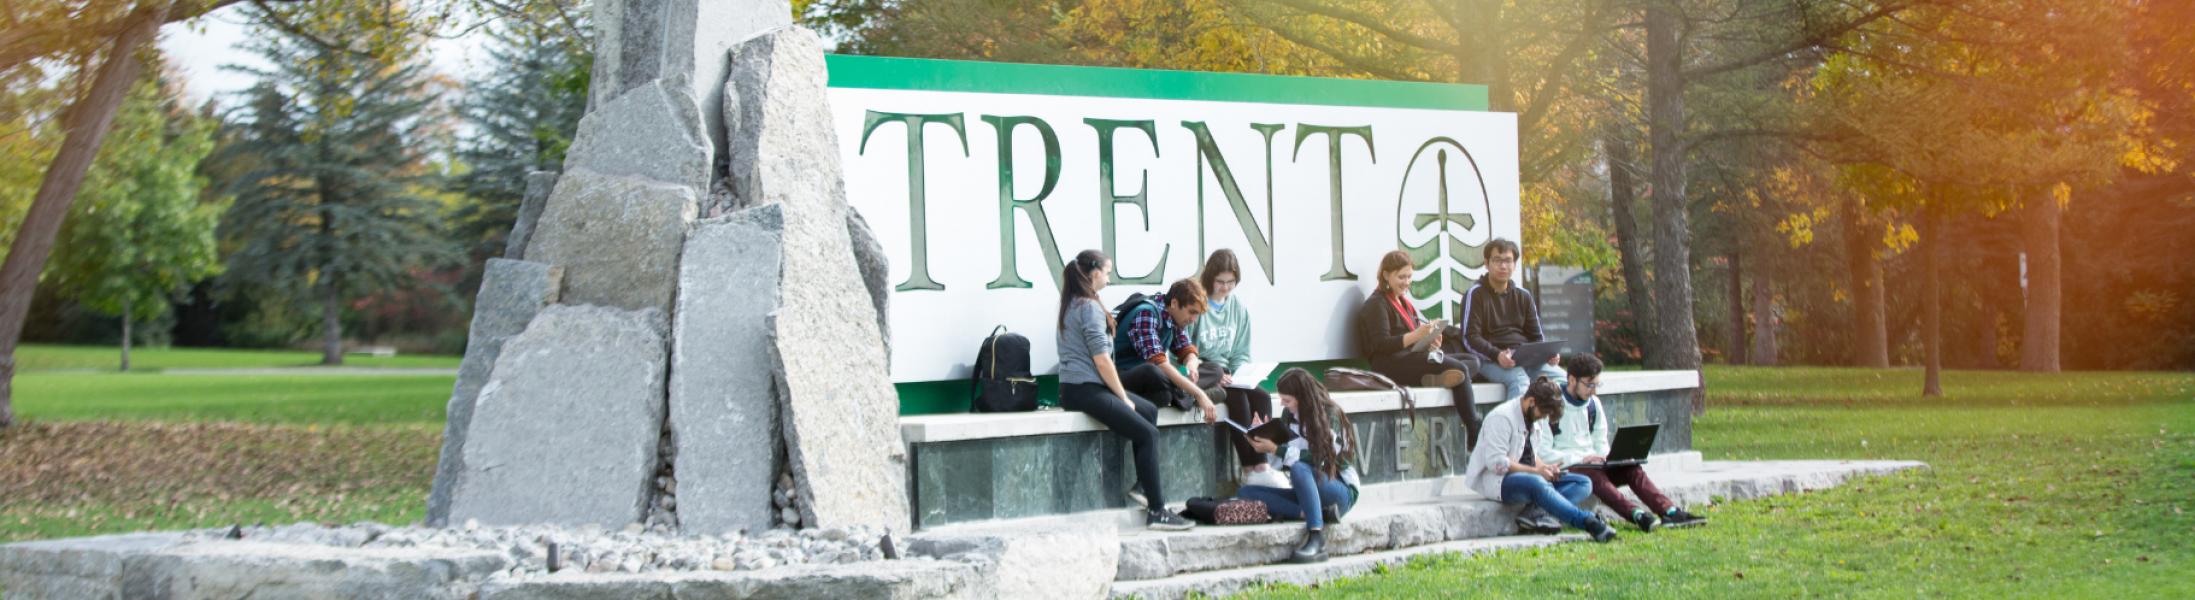 Trent University Sign